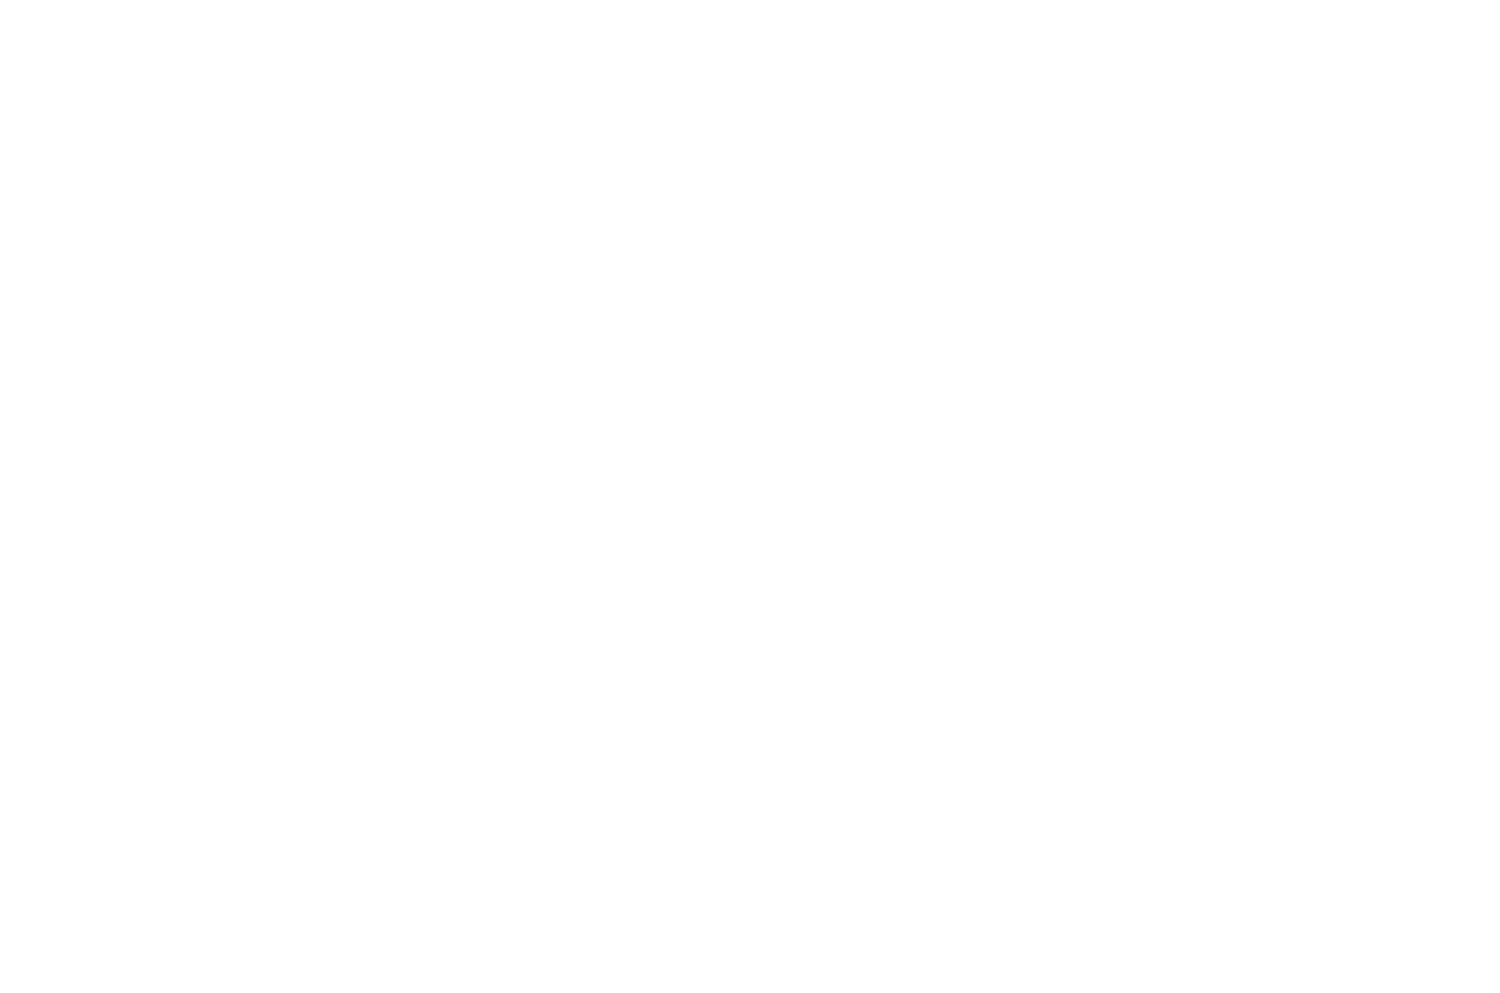  Freith Farm - Lamb